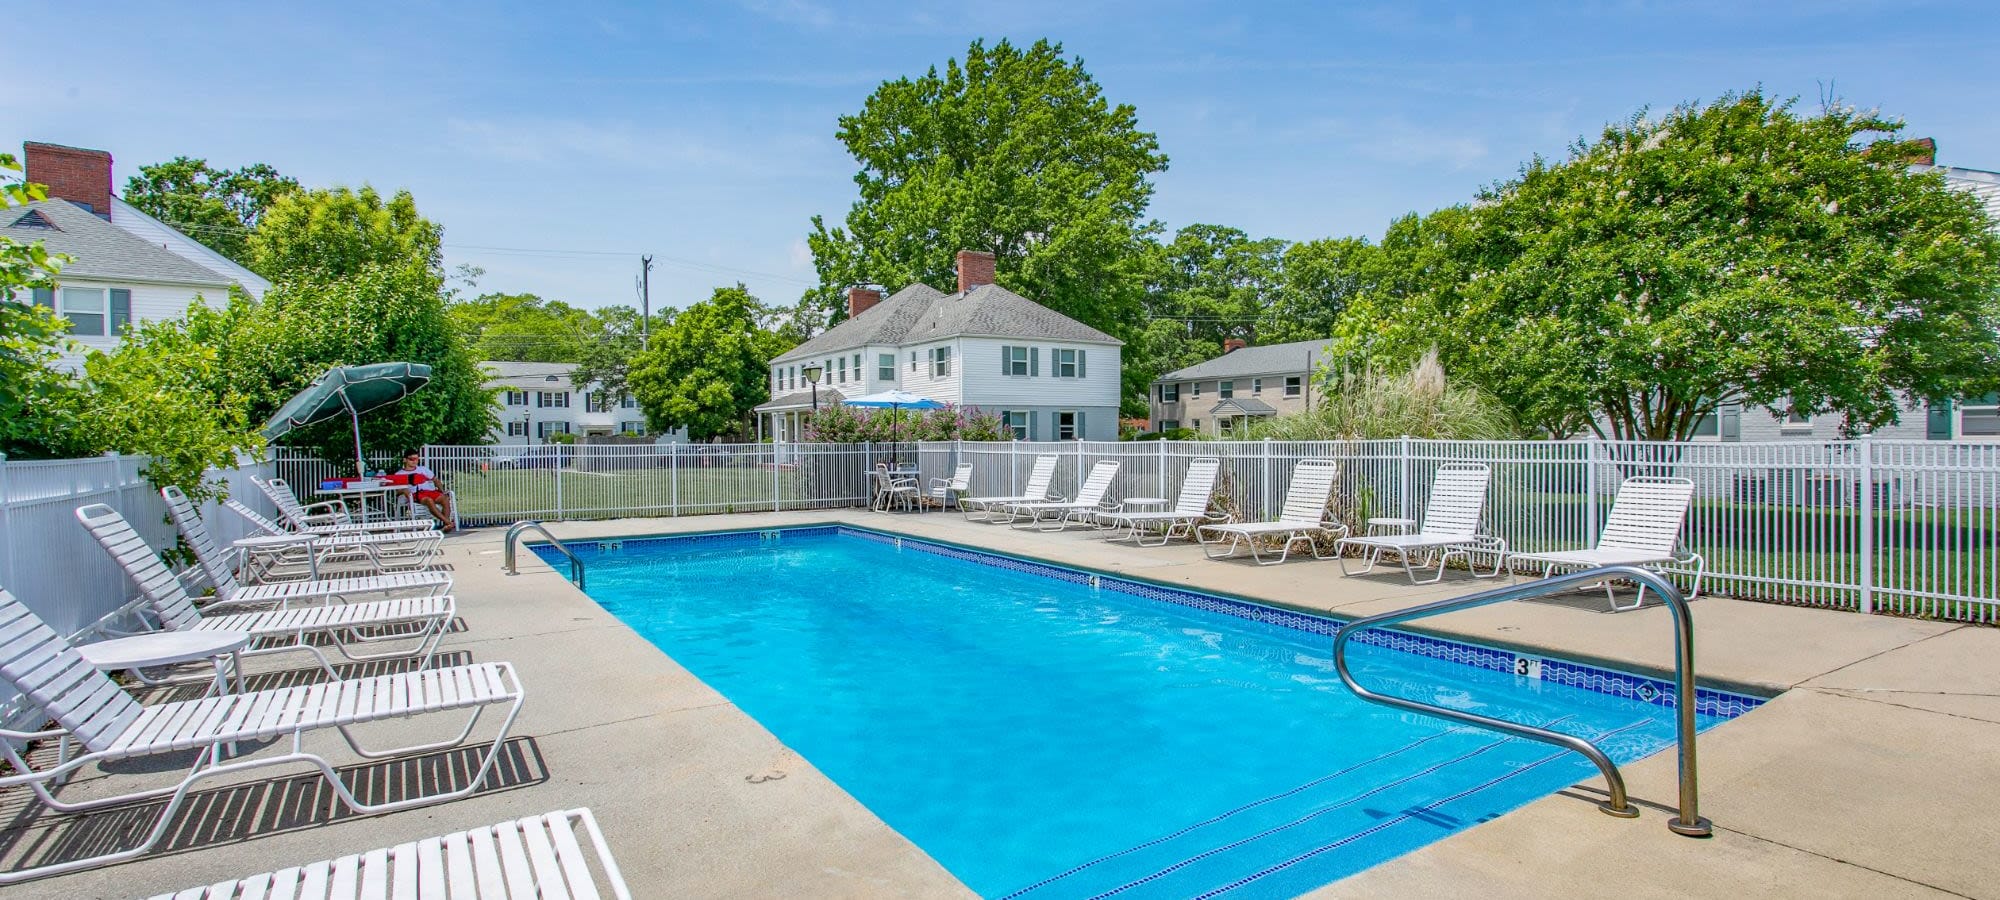 Pool facility at Sterling Oaks in Norfolk, Virginia